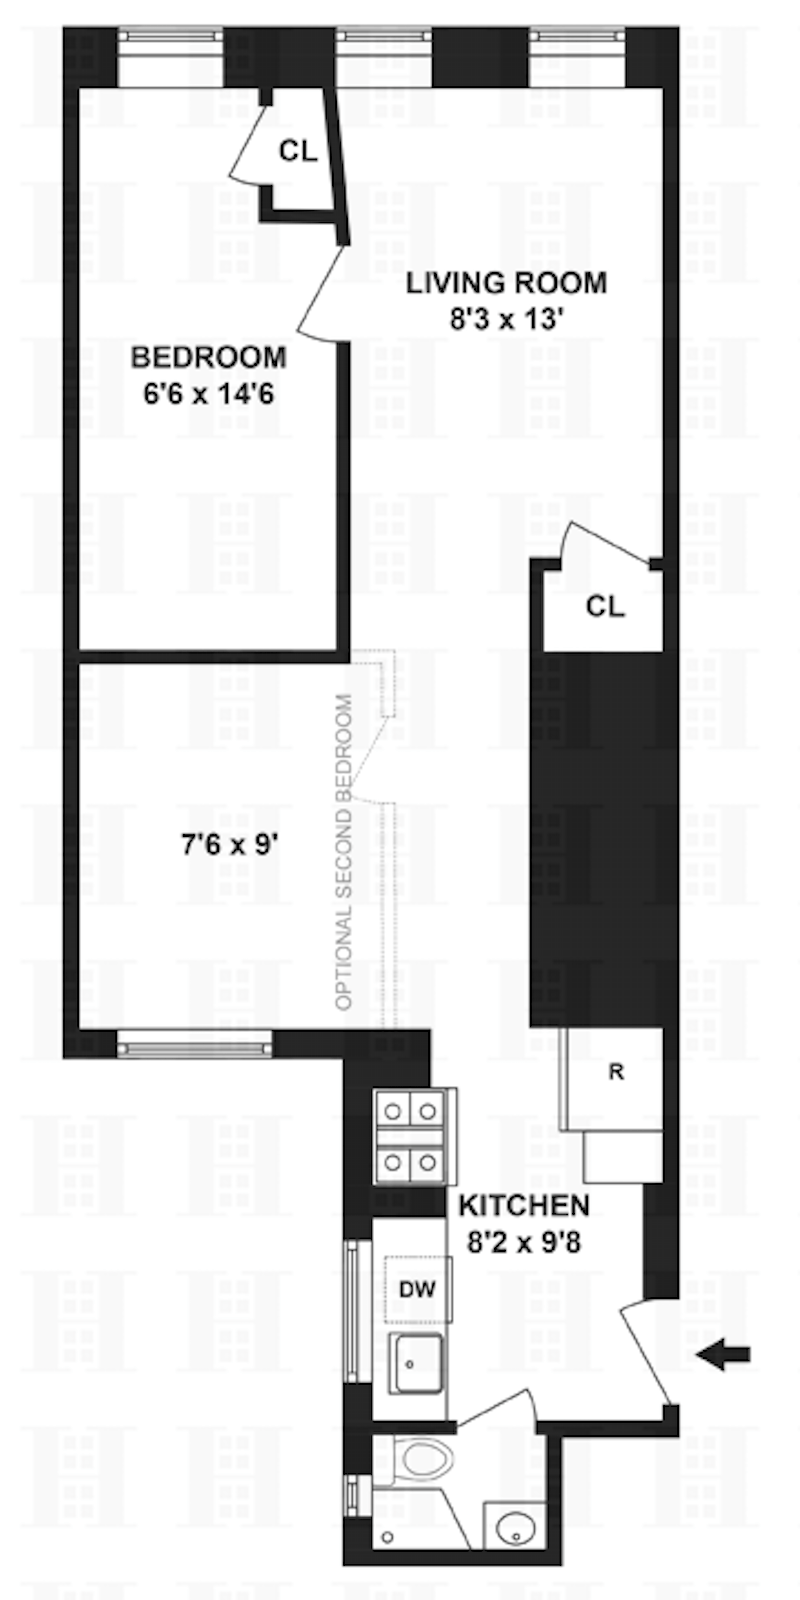 Floorplan for 246 East 53rd Street, 14